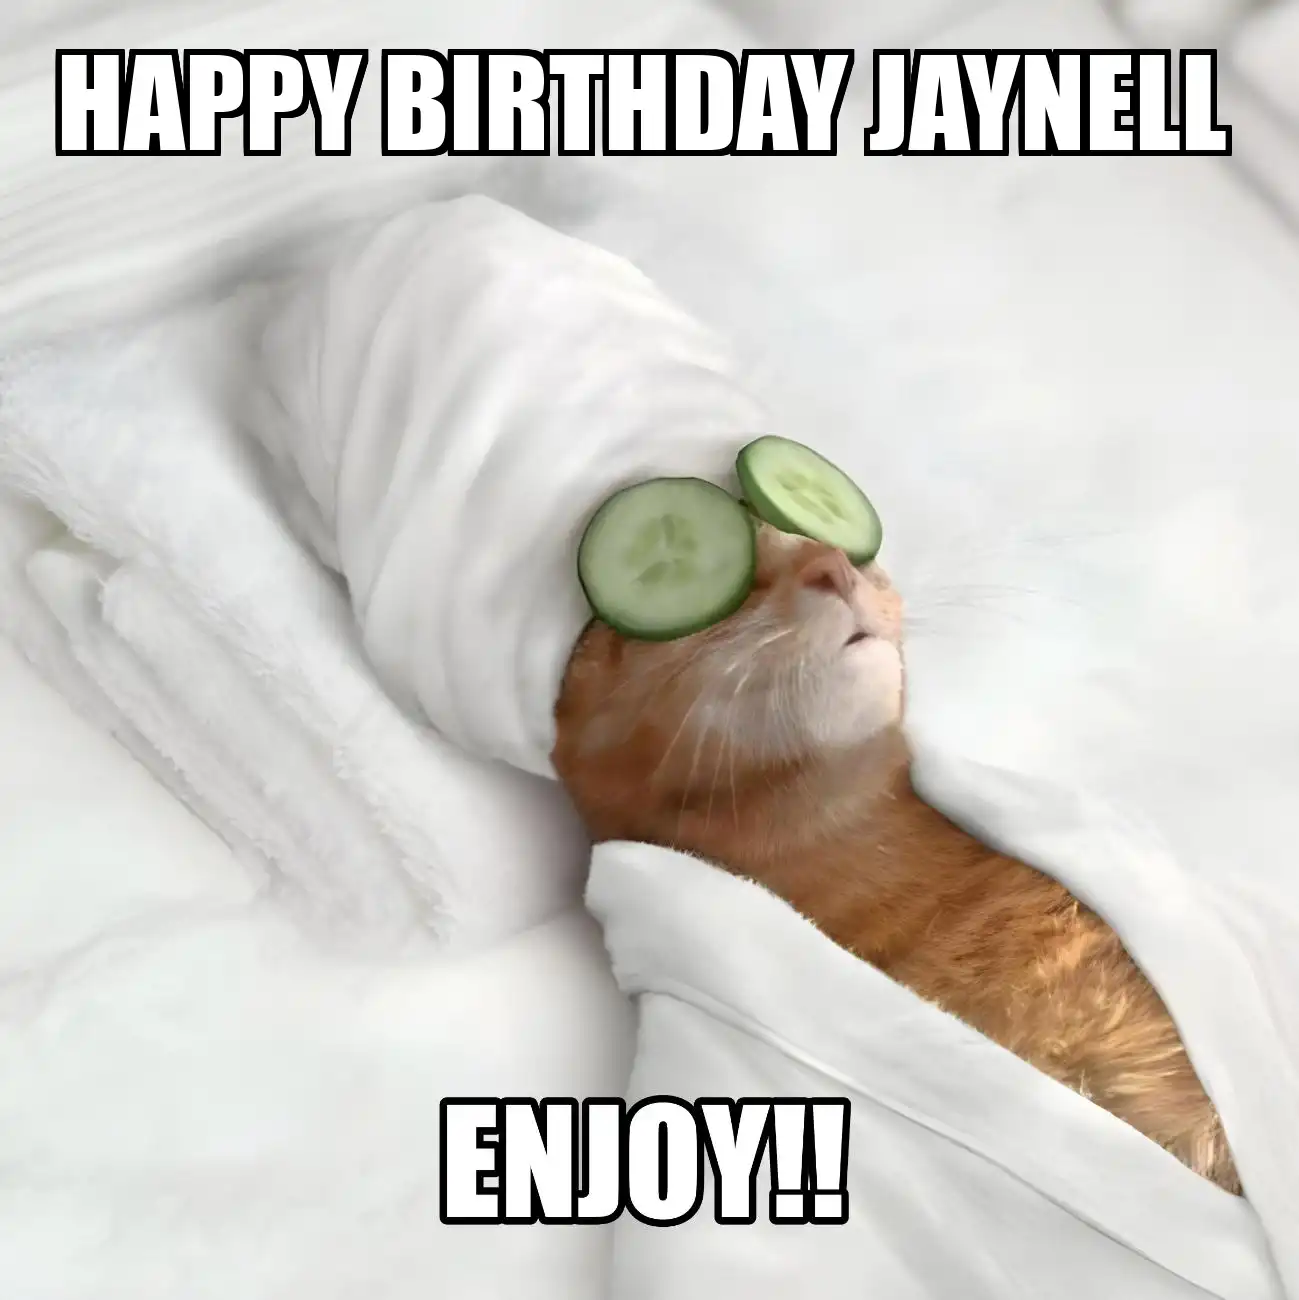 Happy Birthday Jaynell Enjoy Cat Meme